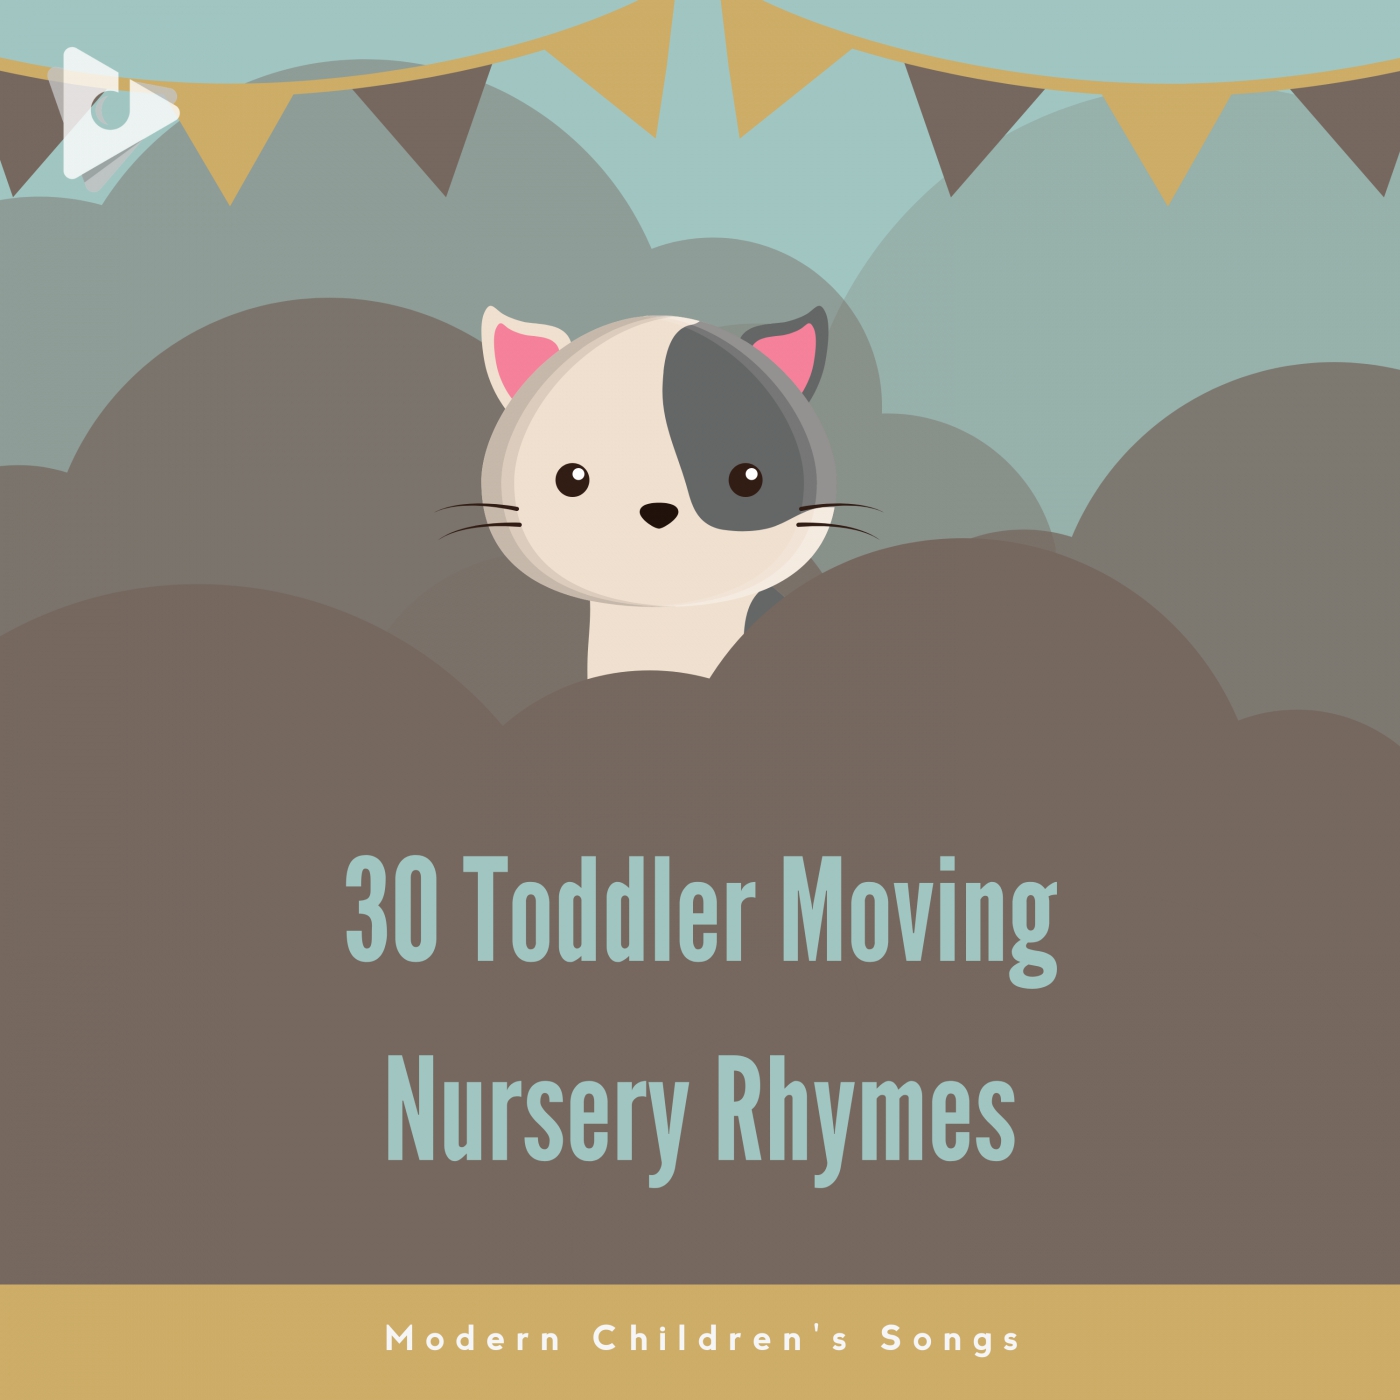 30 Toddler Moving Nursery Rhymes